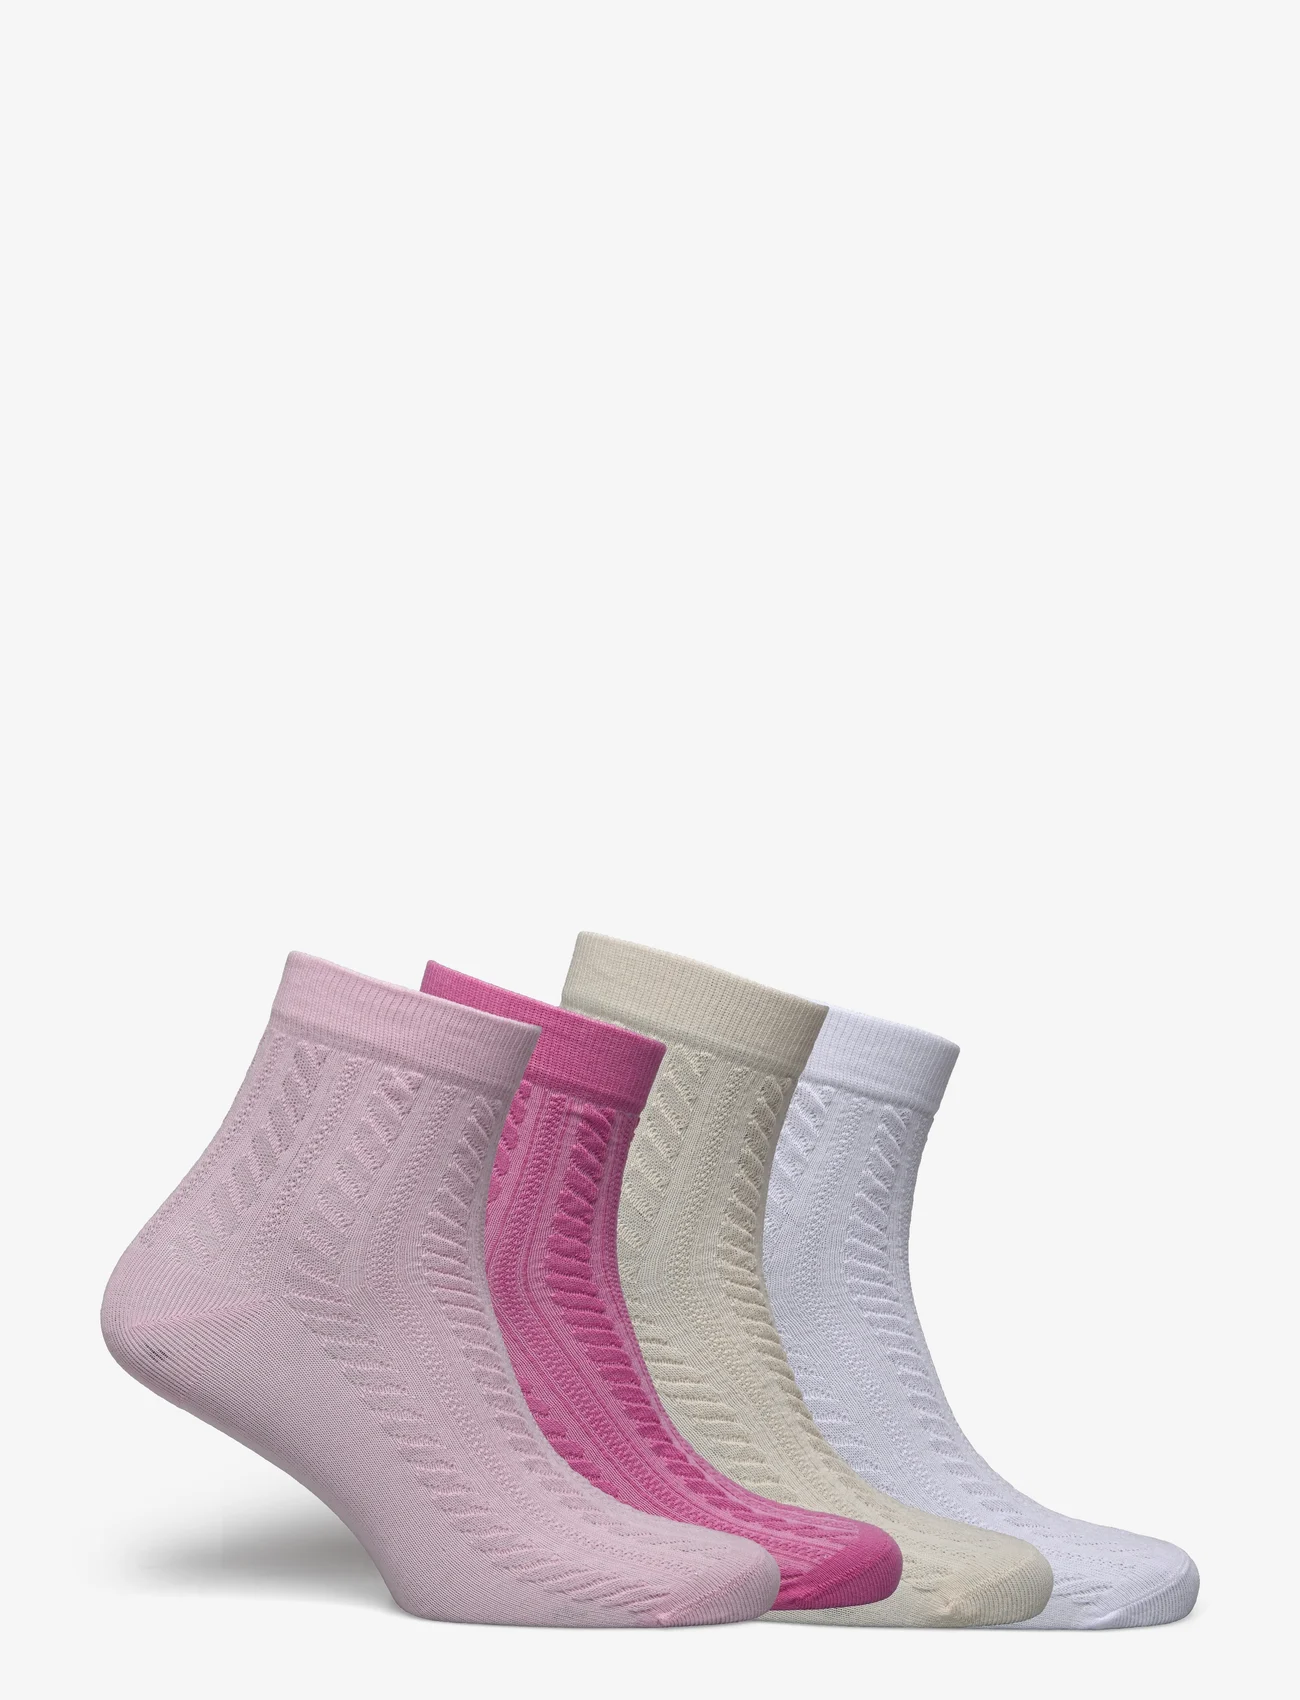 Lindex - sock high ankle 4 p soft cable - die niedrigsten preise - pink - 1